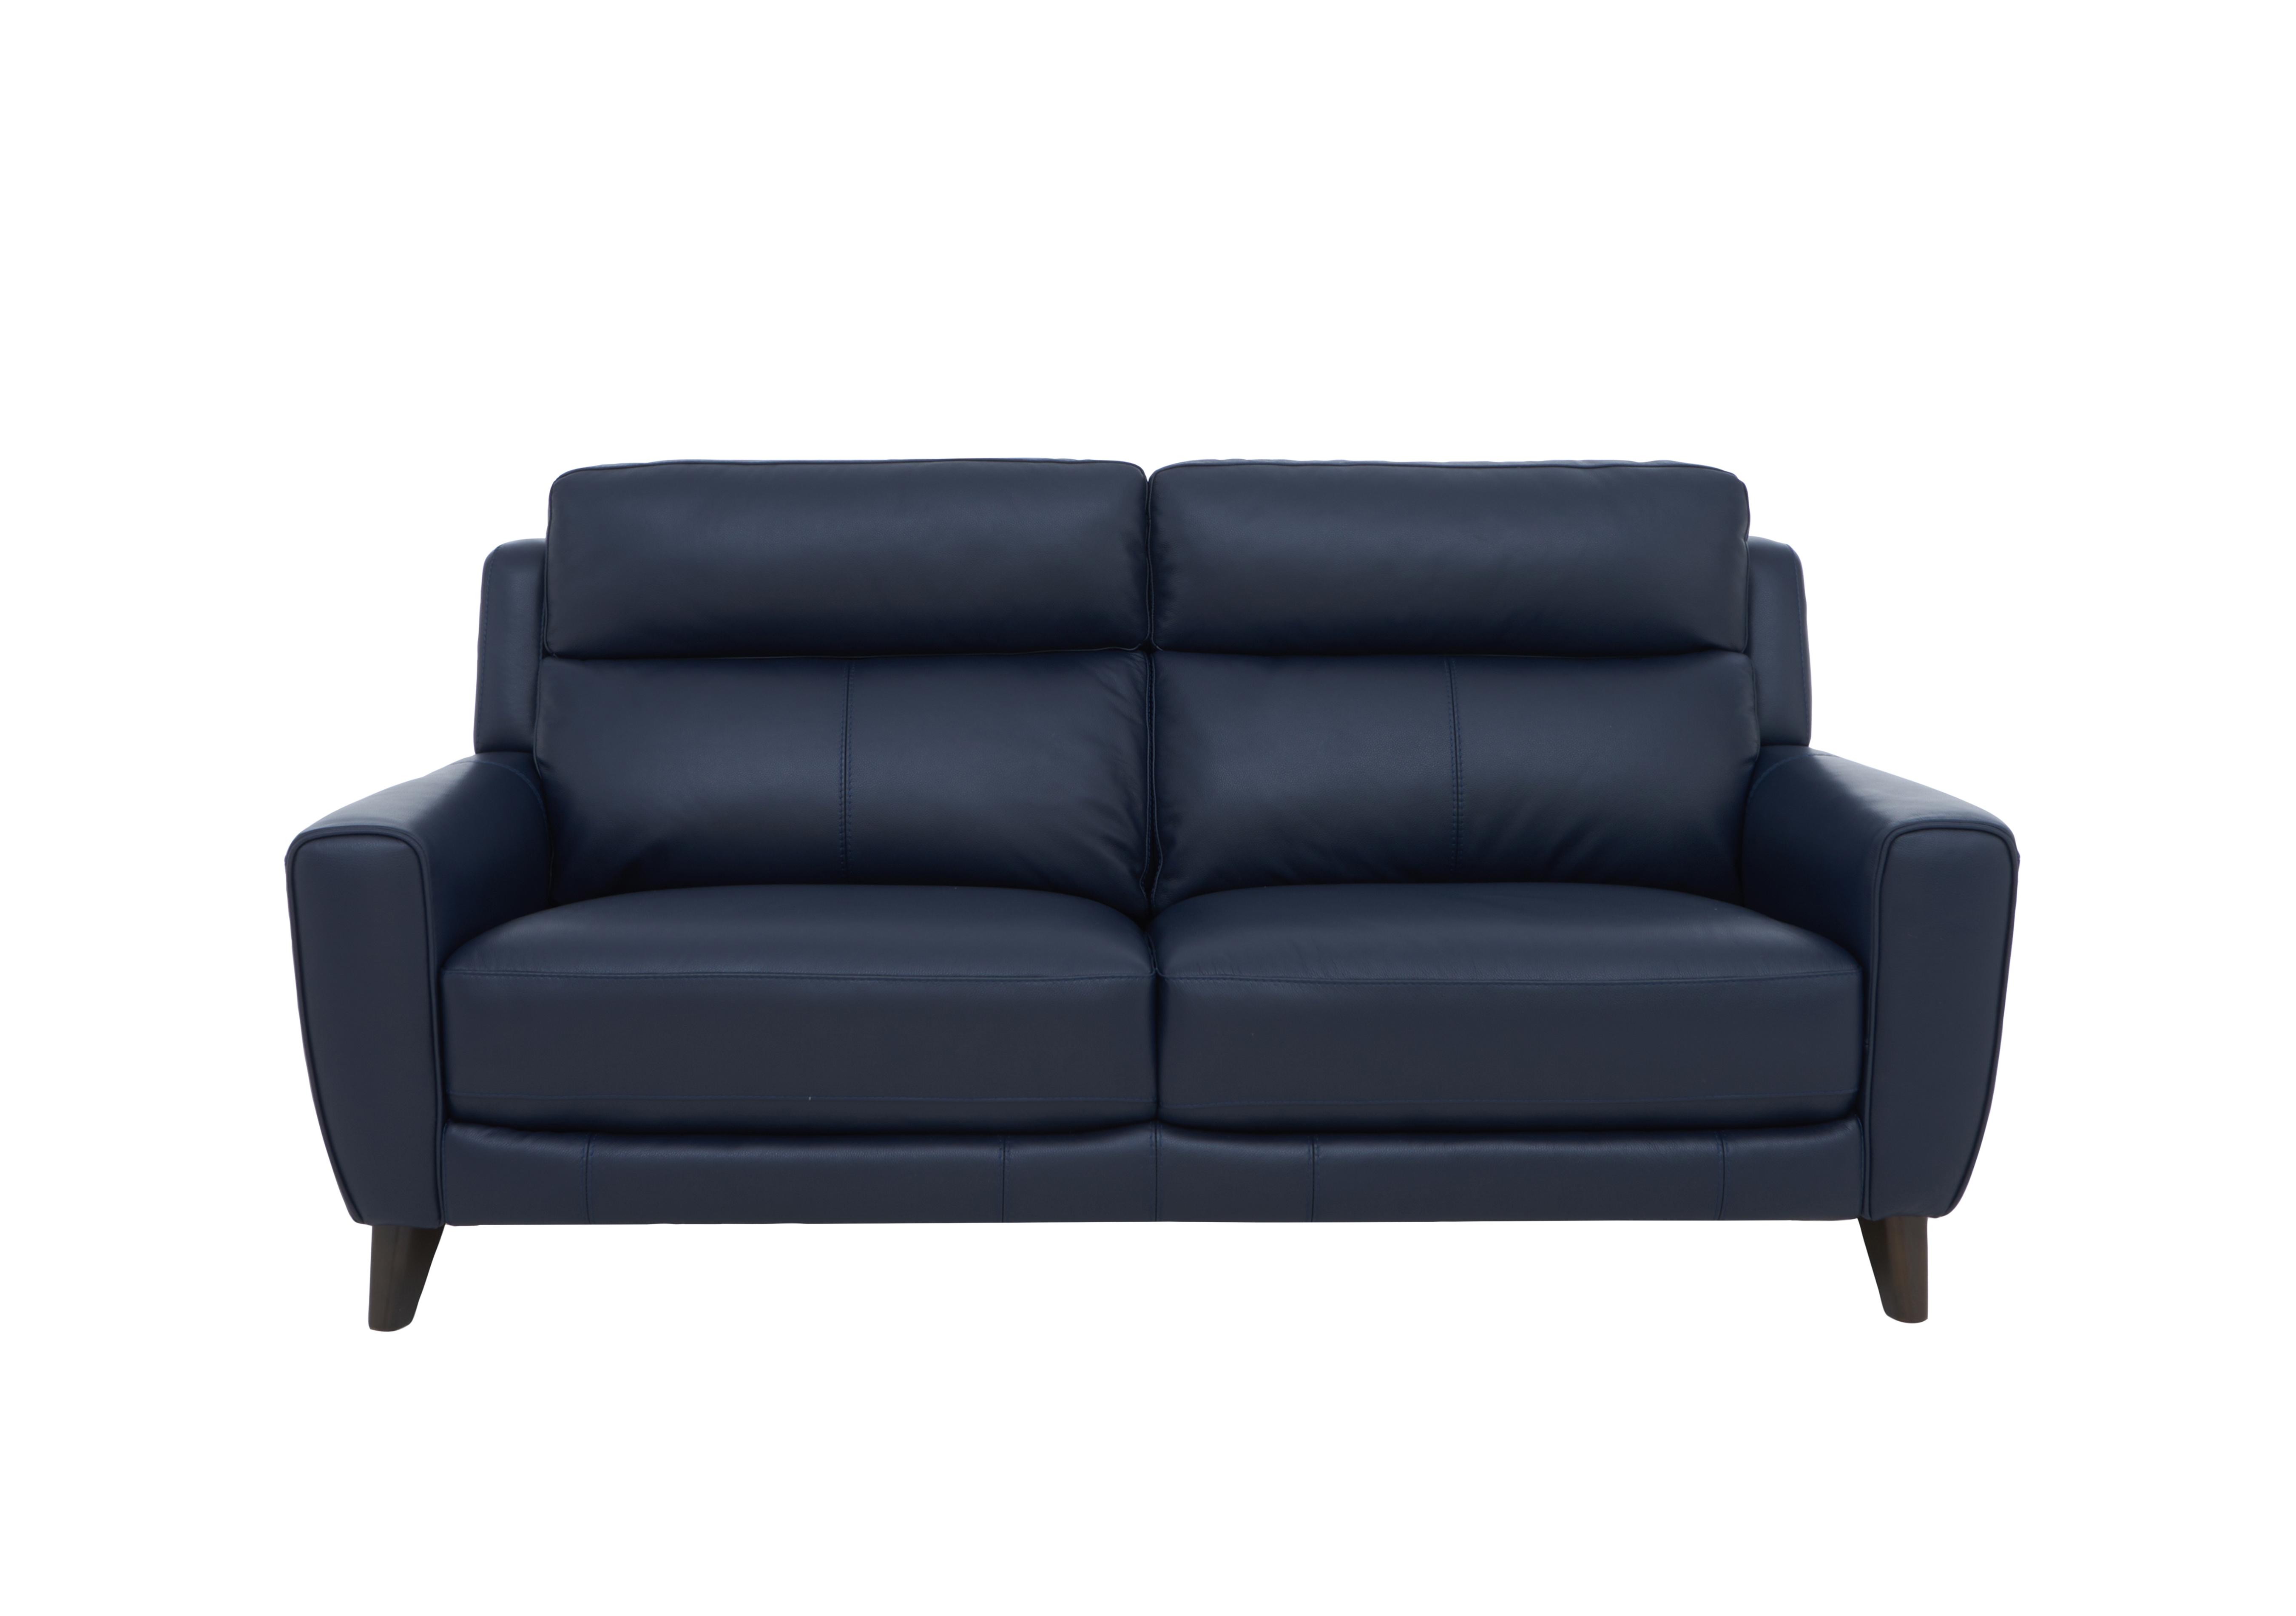 Zen 3 Seater Leather Sofa in Bx-036c Navy on Furniture Village